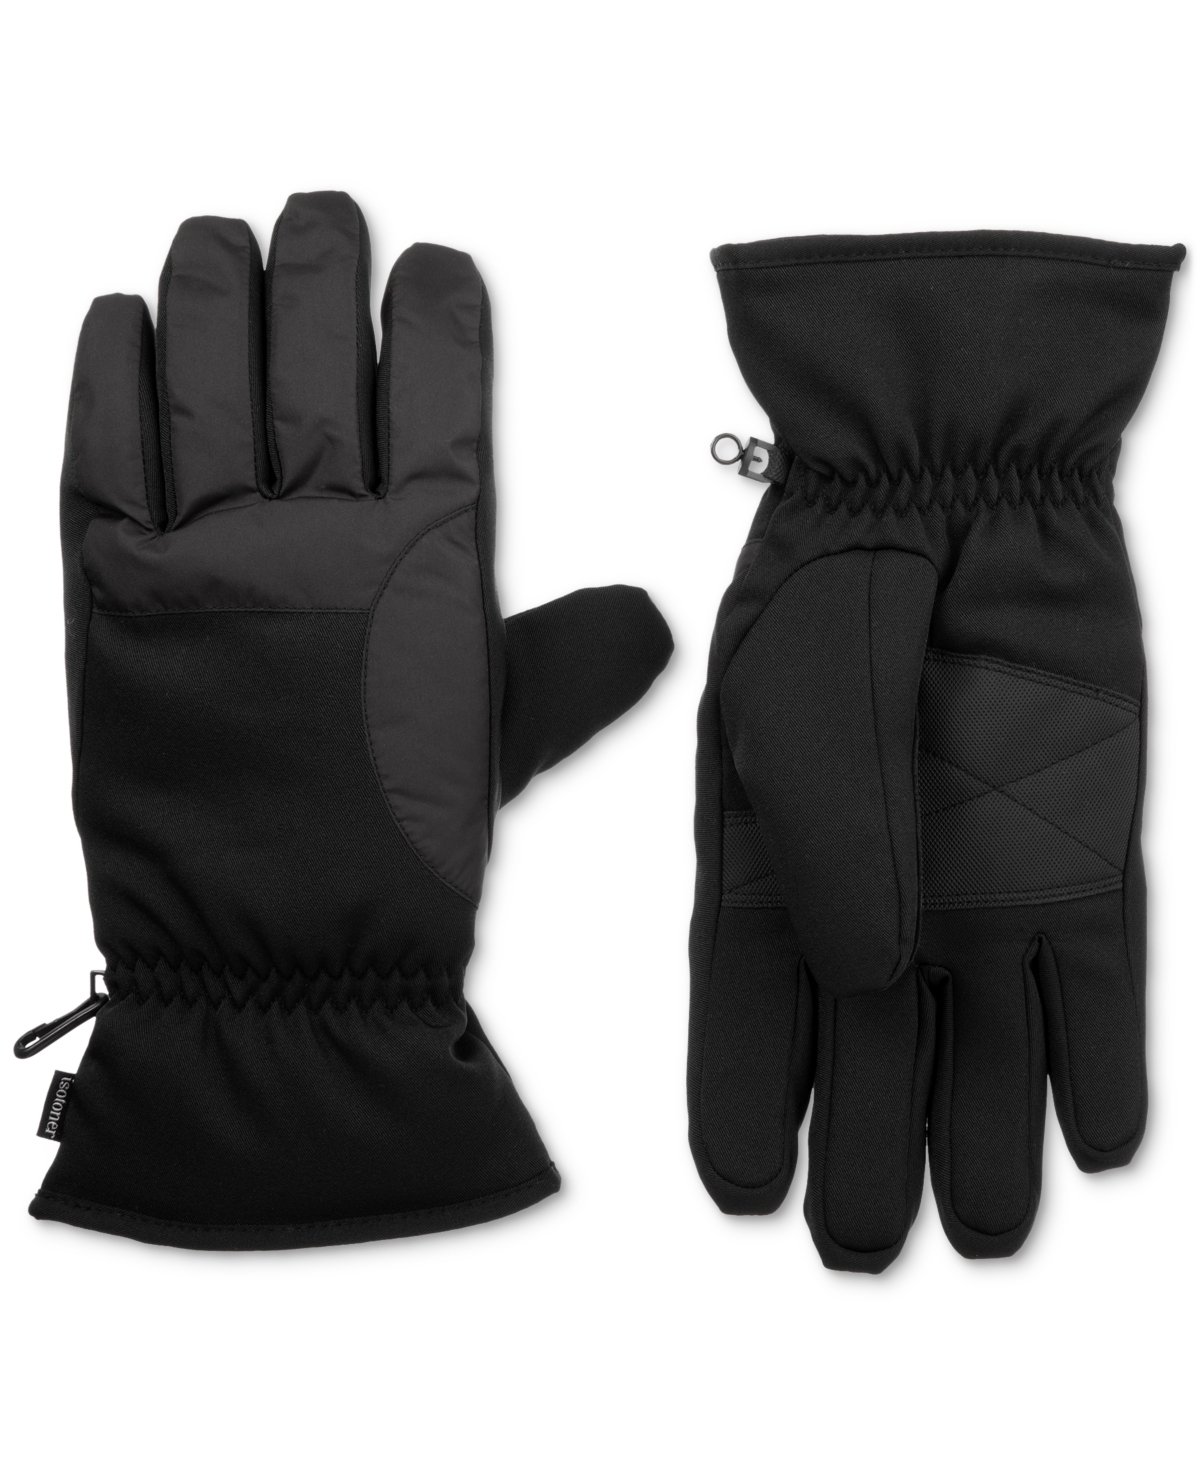 Men's Touchscreen Waterproof Sport Gloves - Black